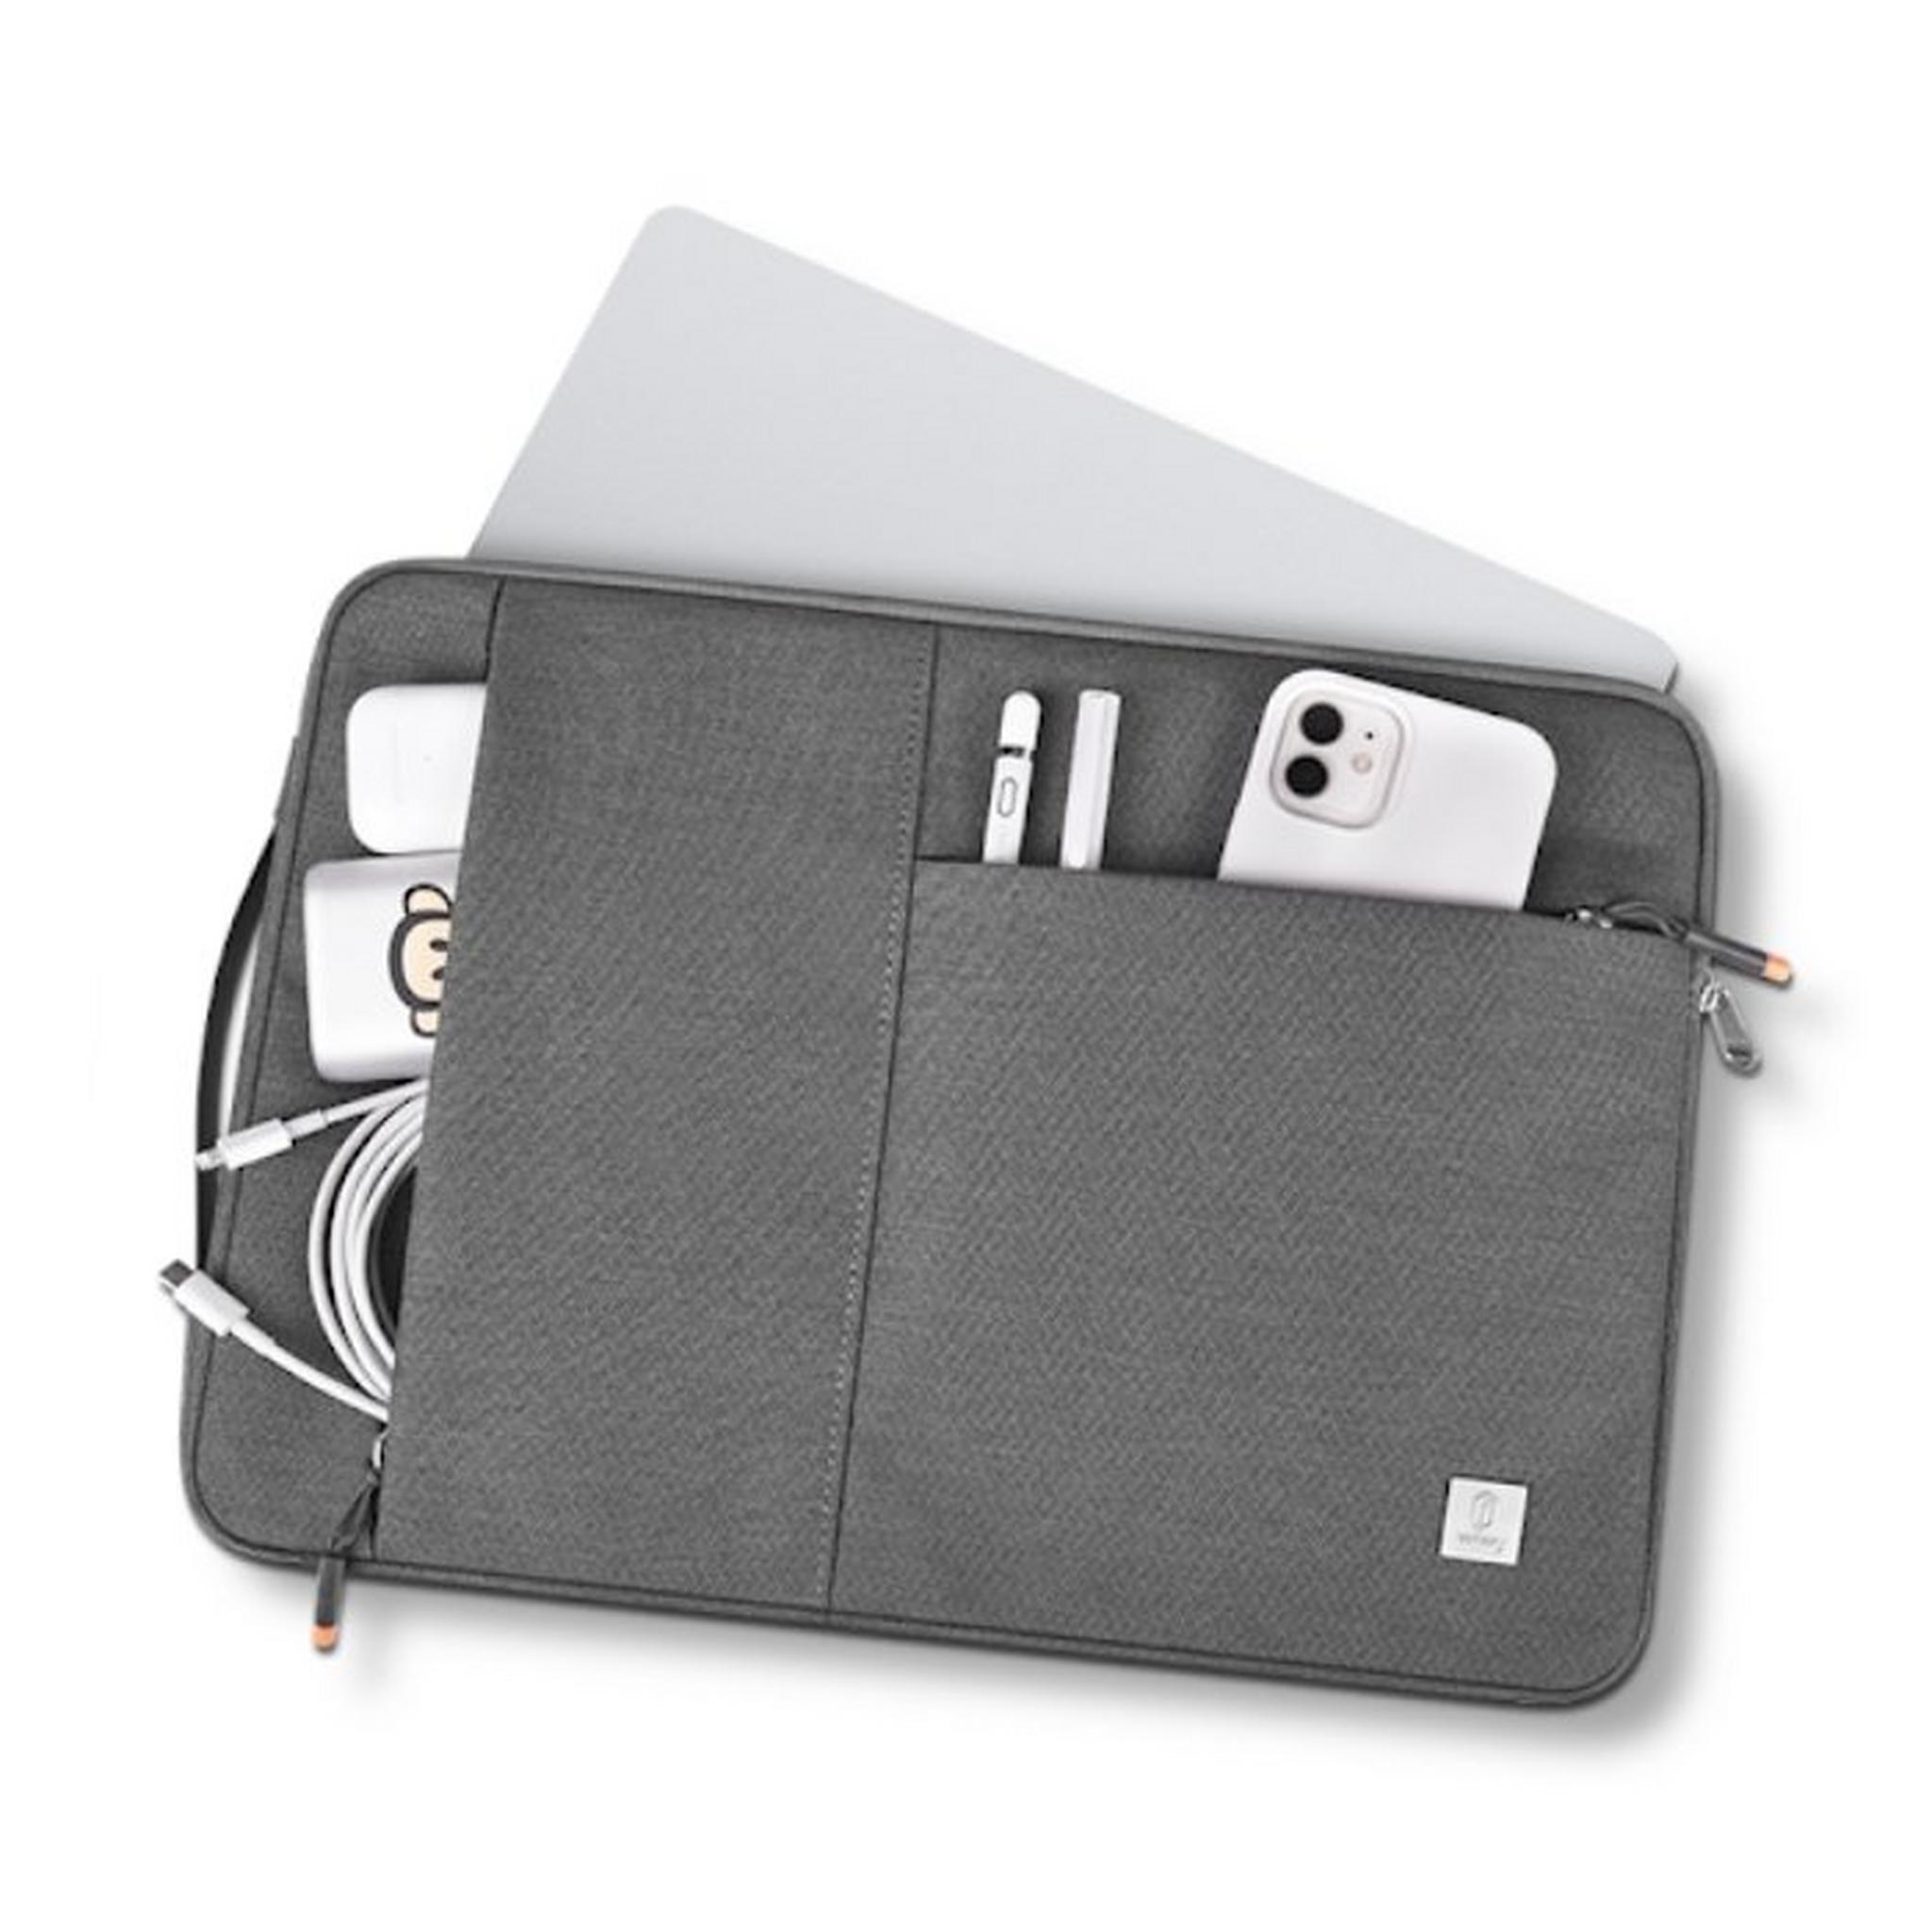 Wiwu Alpha Slim Sleeve for 15.6-inch Laptop - Grey